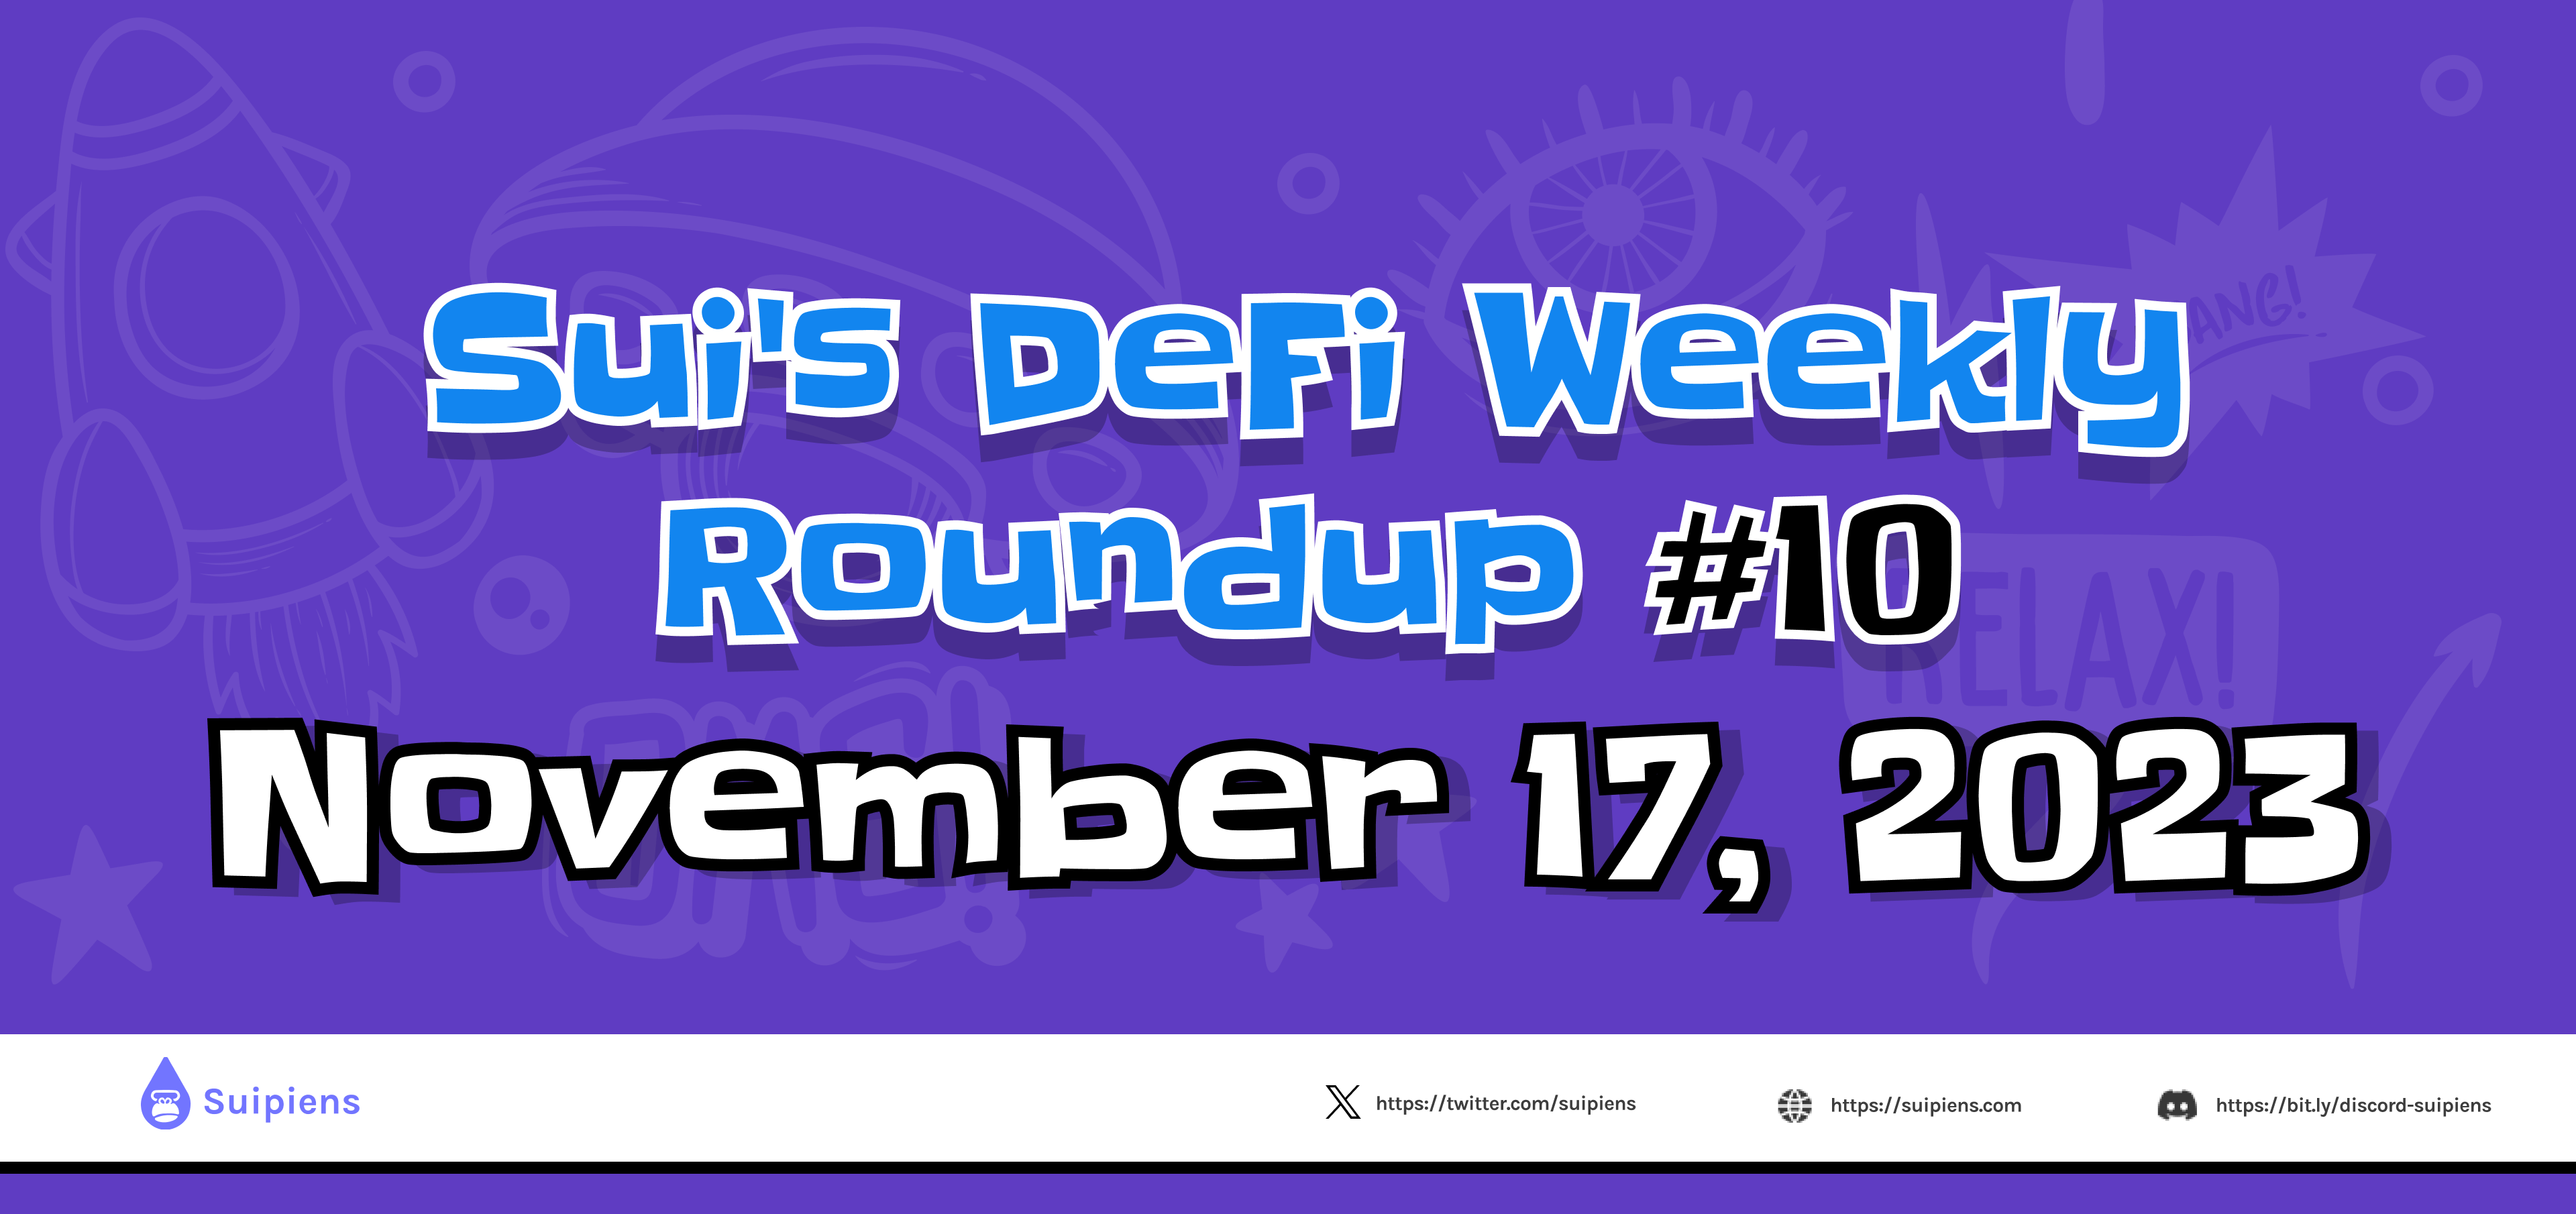 Sui's DeFi Weekly Roundup #10 (November 17, 2023)